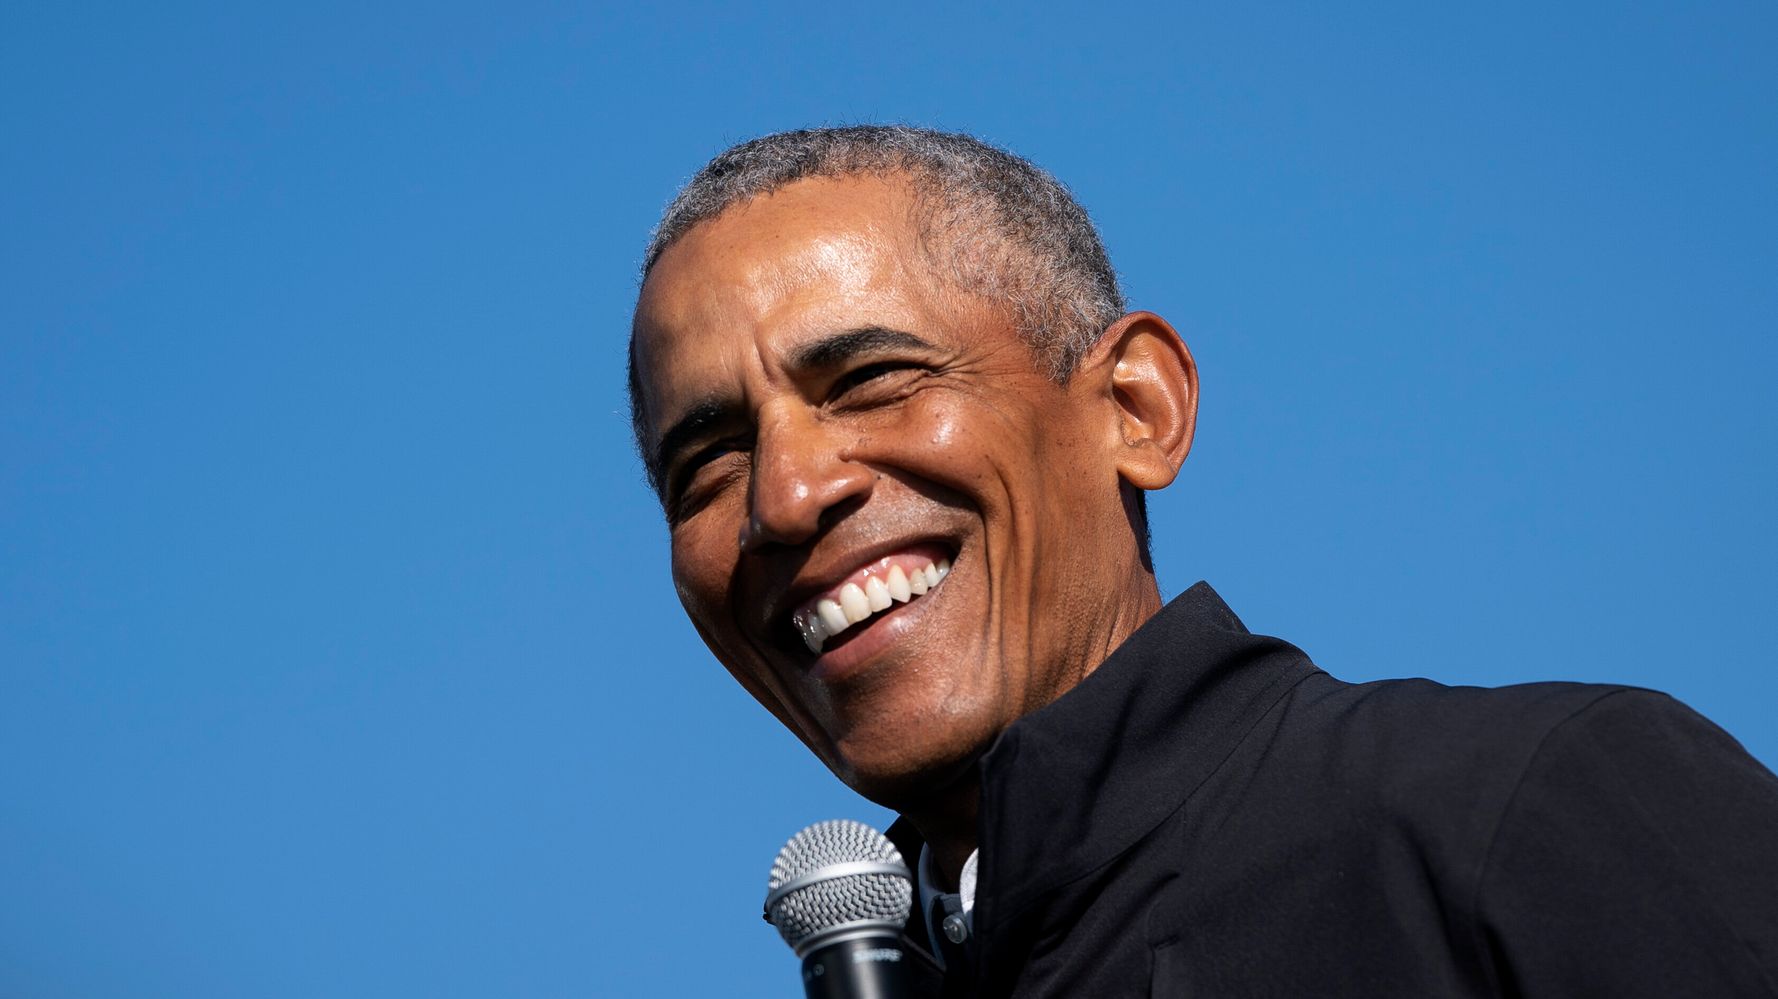 Barack Obama's Scaled-Down Birthday Bash Still Has A Lot Of Celebs